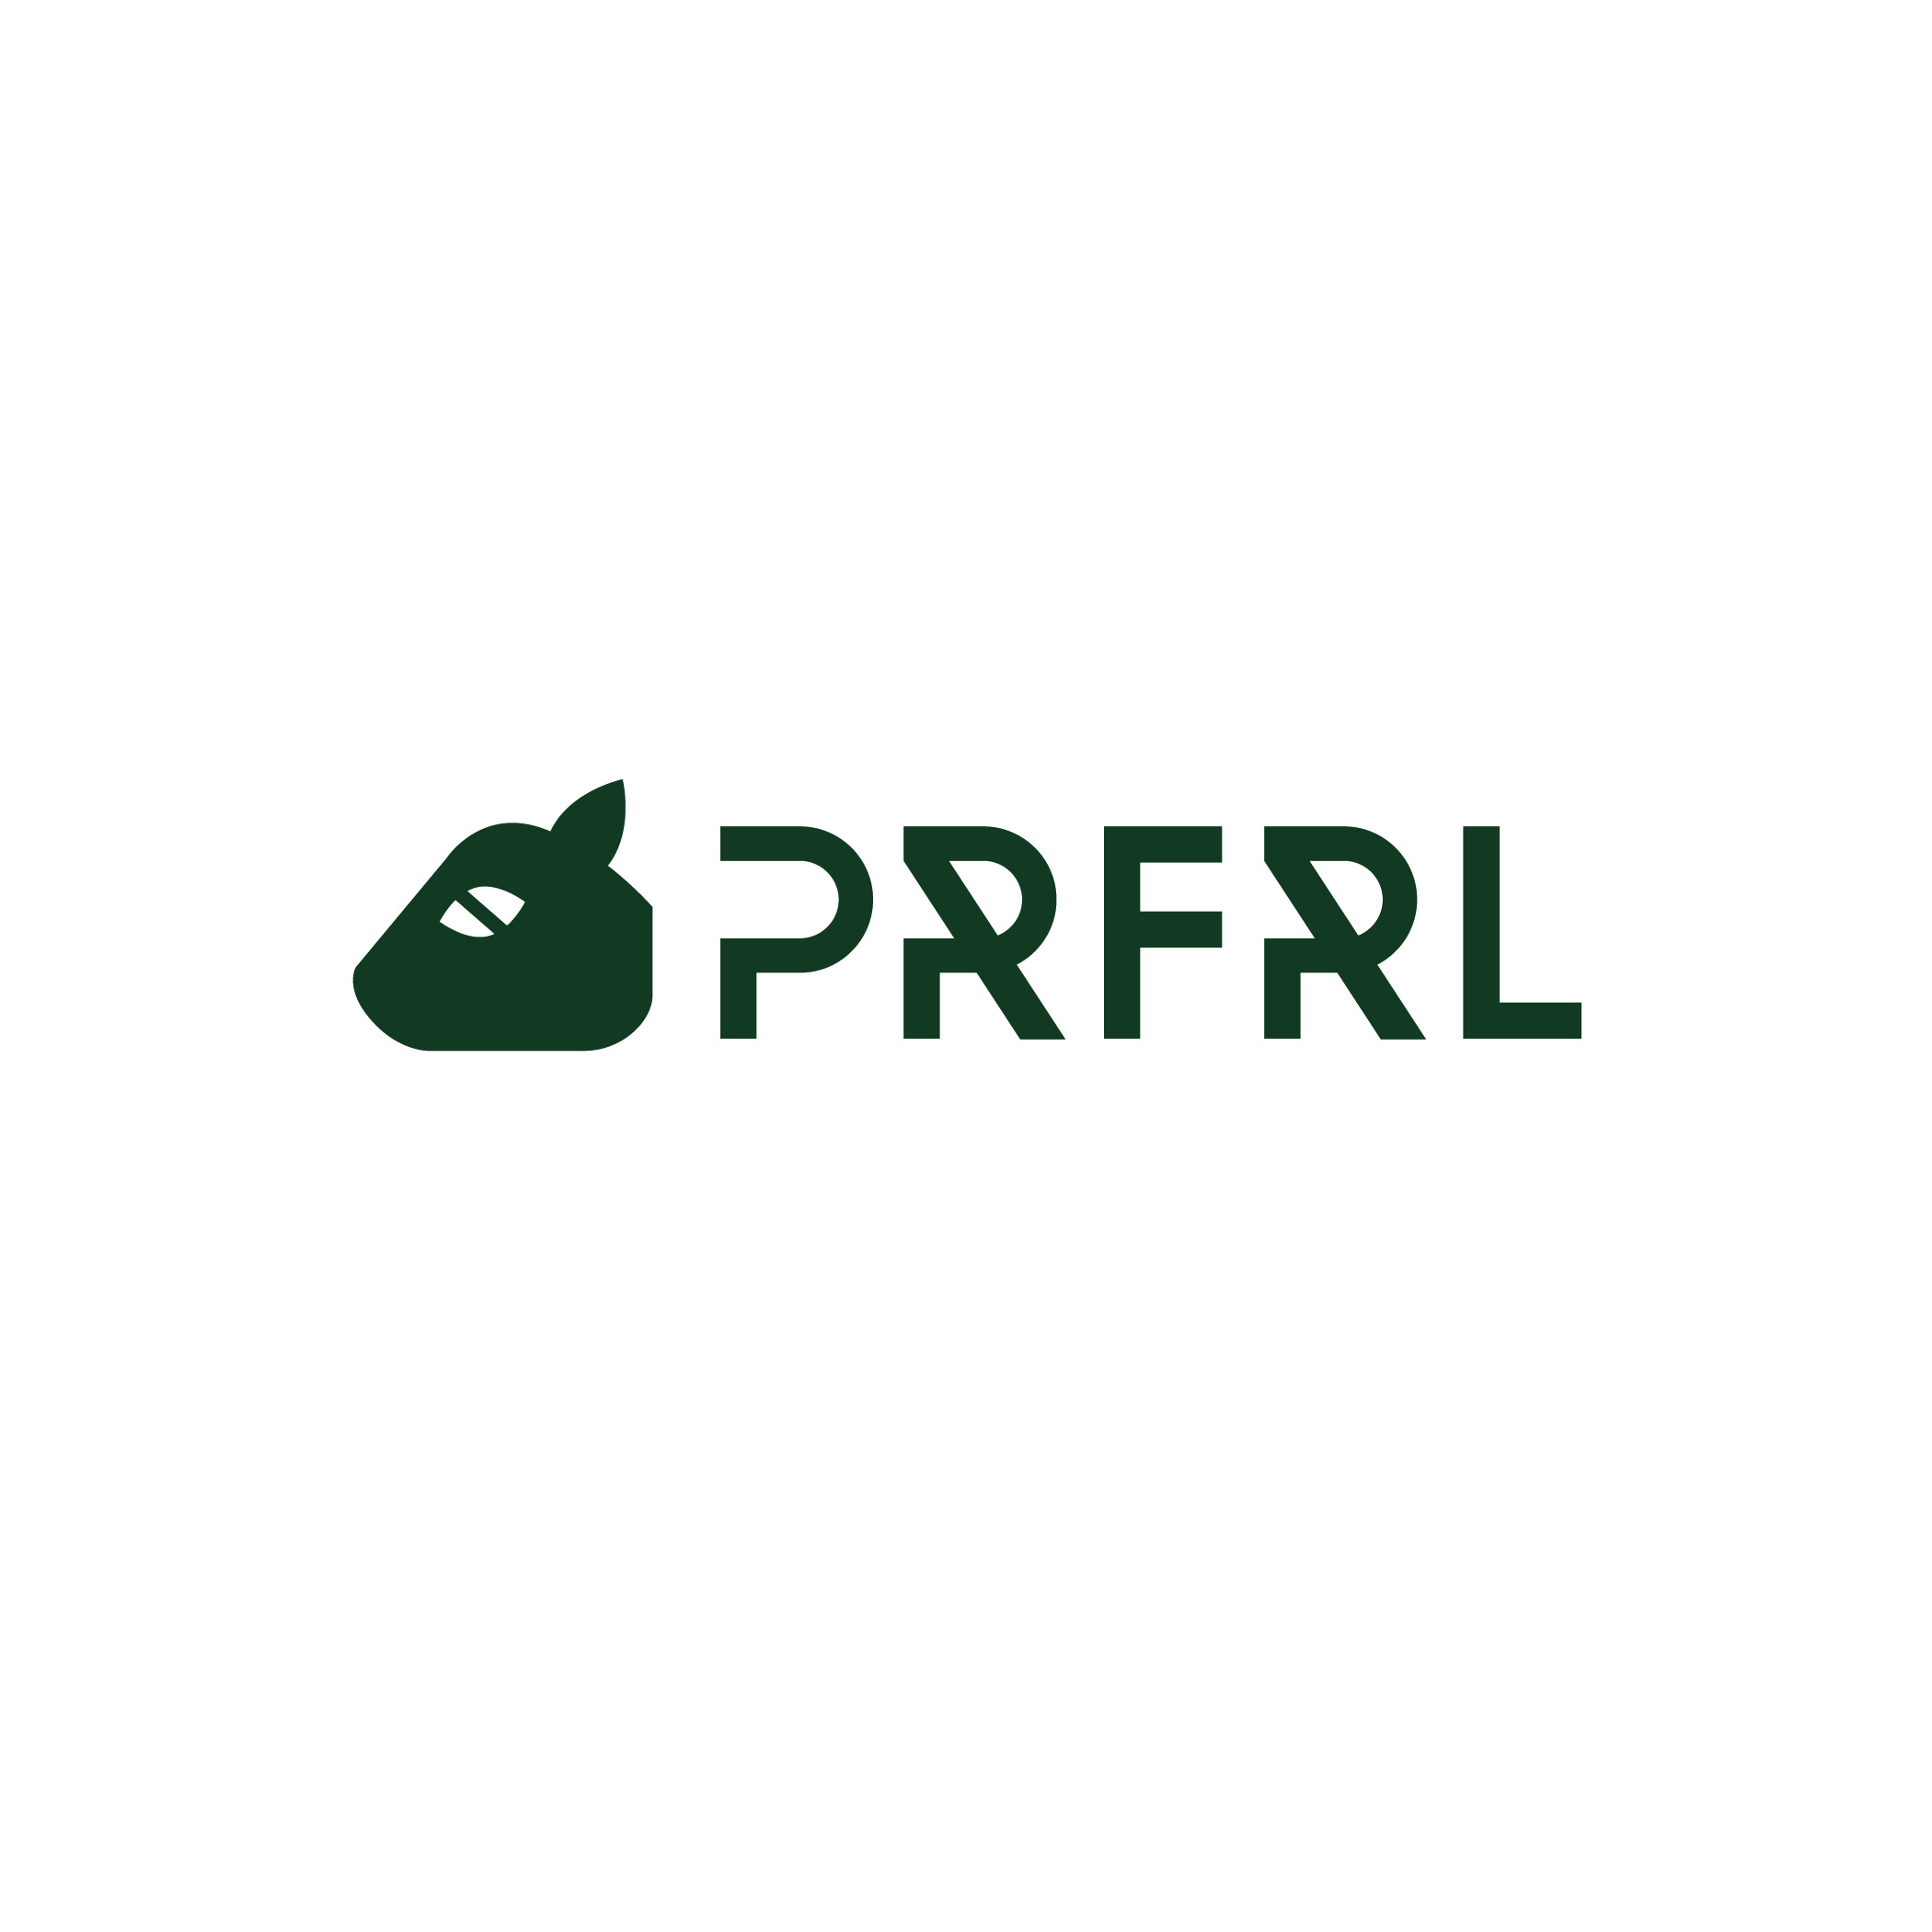 Periferel Shorthand Logo Green_CMYK_HighRes.jpg